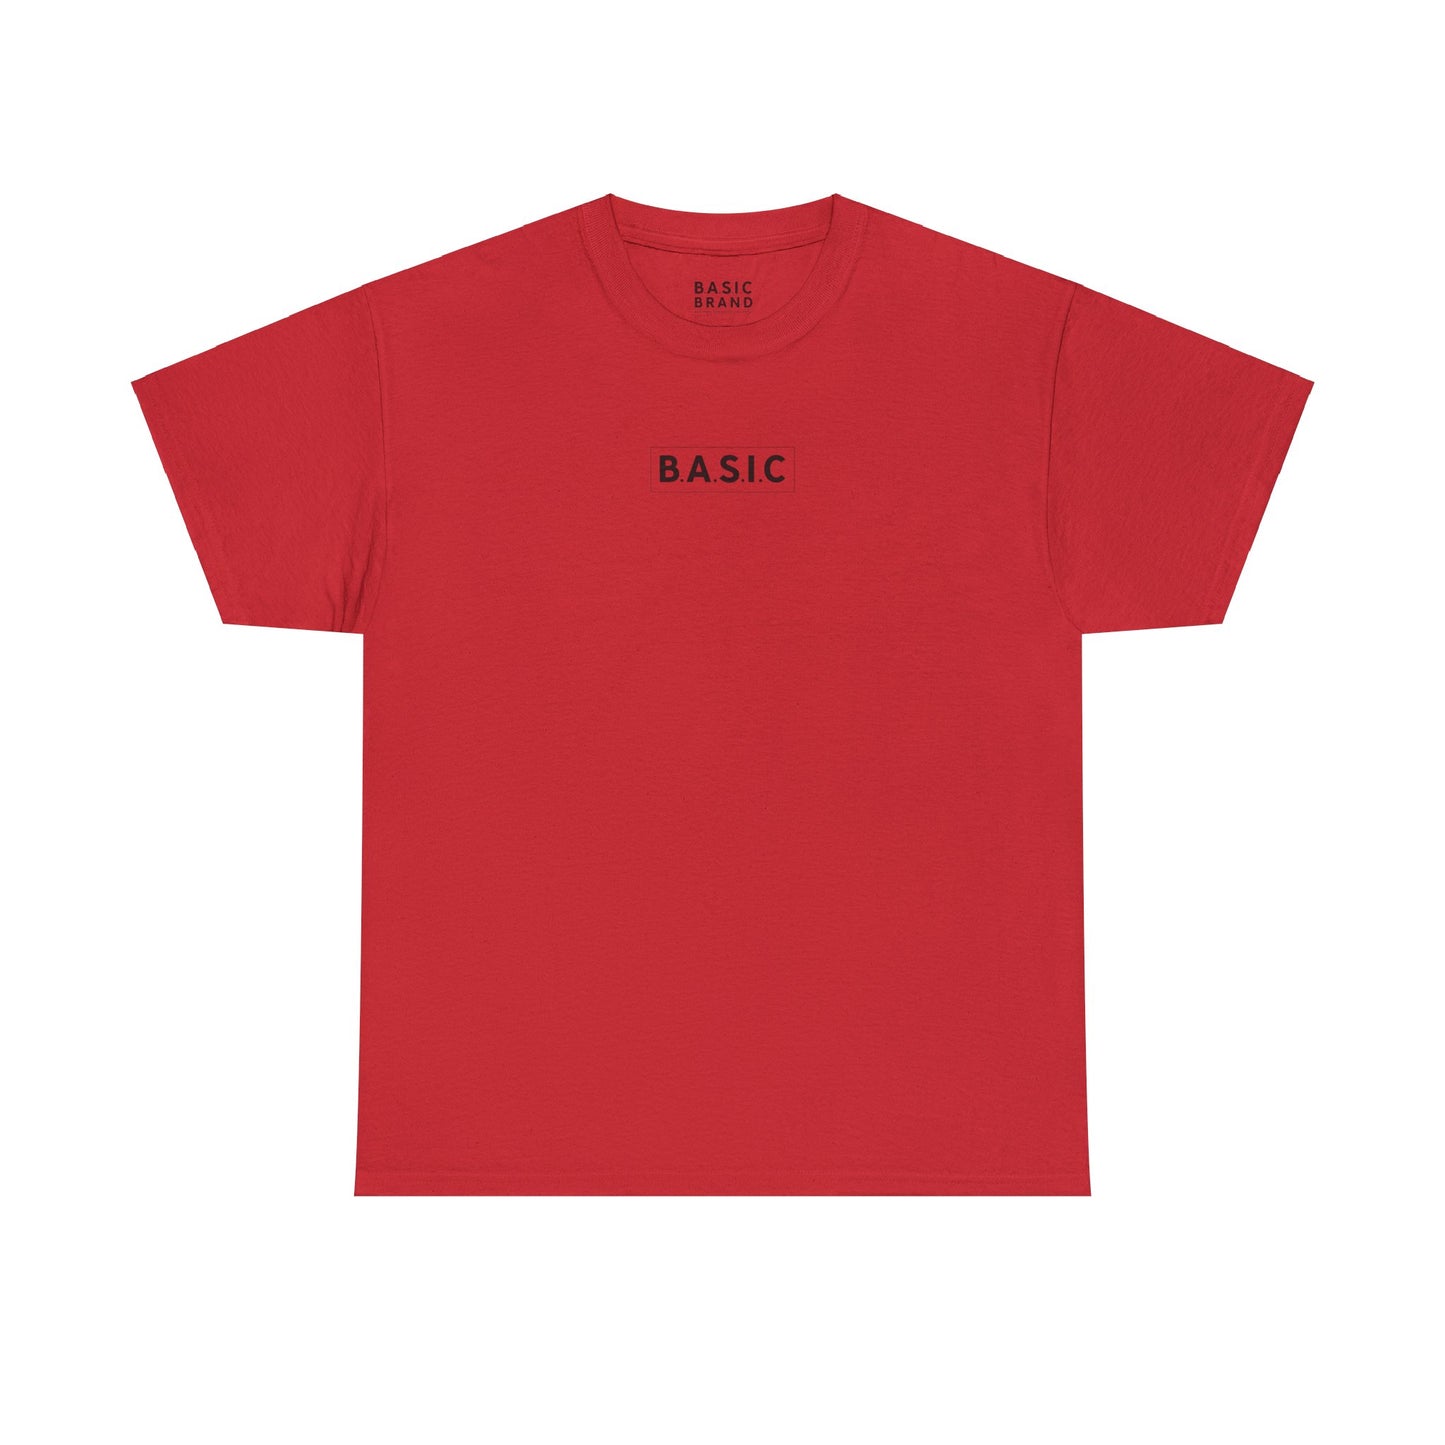 Men's B.A.S.I.C "Boxed Small Logo" Tee Shirt